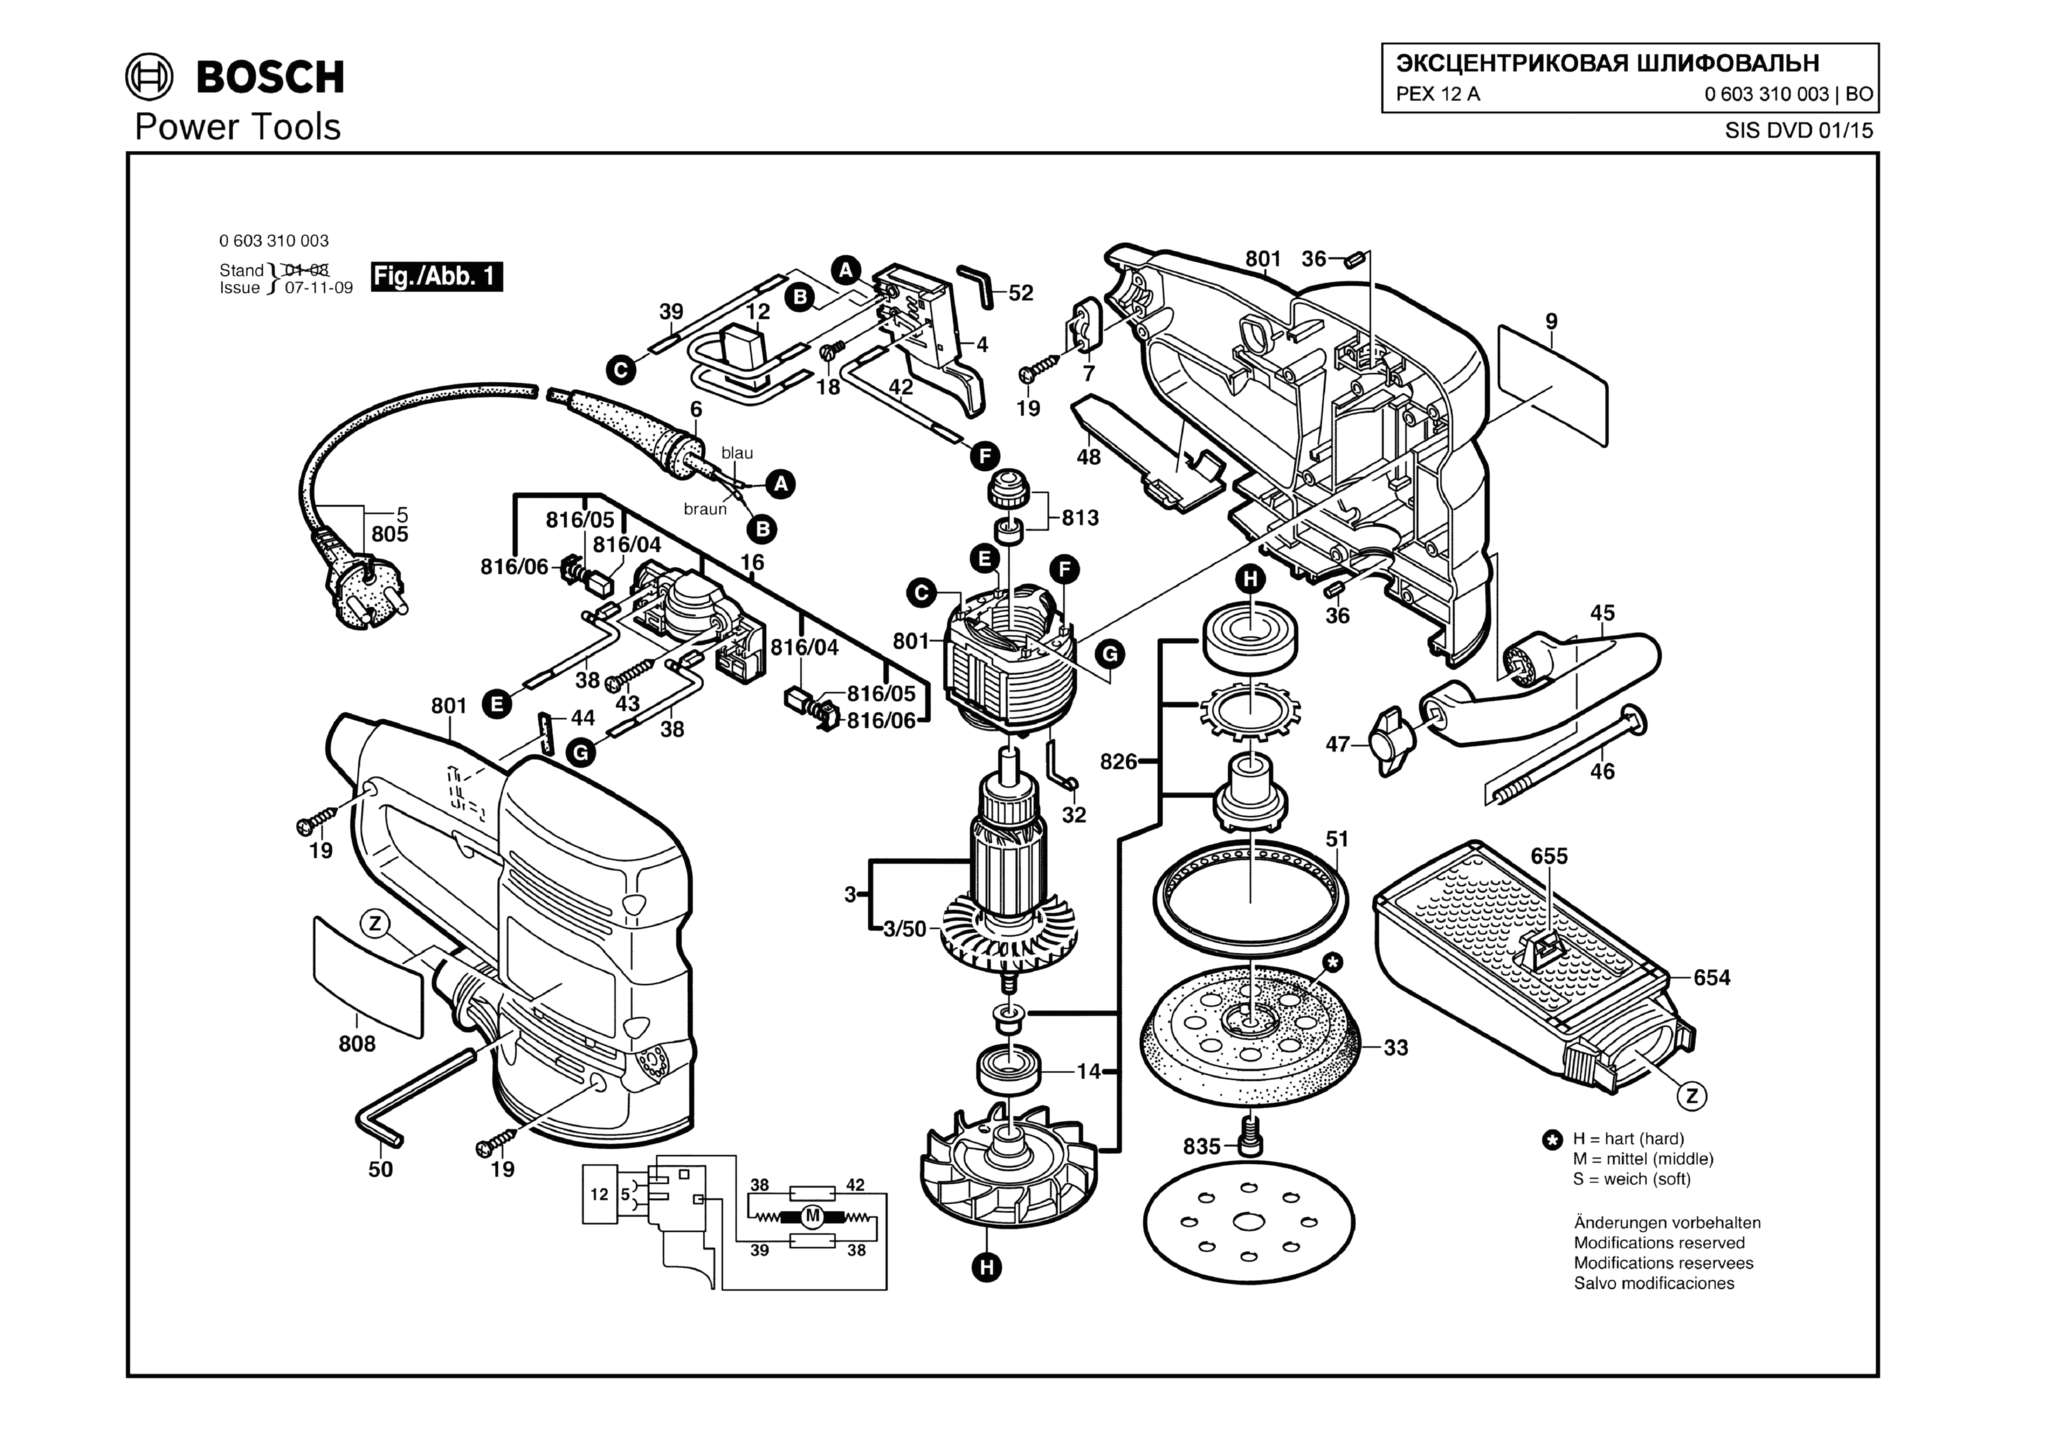 Запчасти, схема и деталировка Bosch PEX 12 A (ТИП 0603310003)